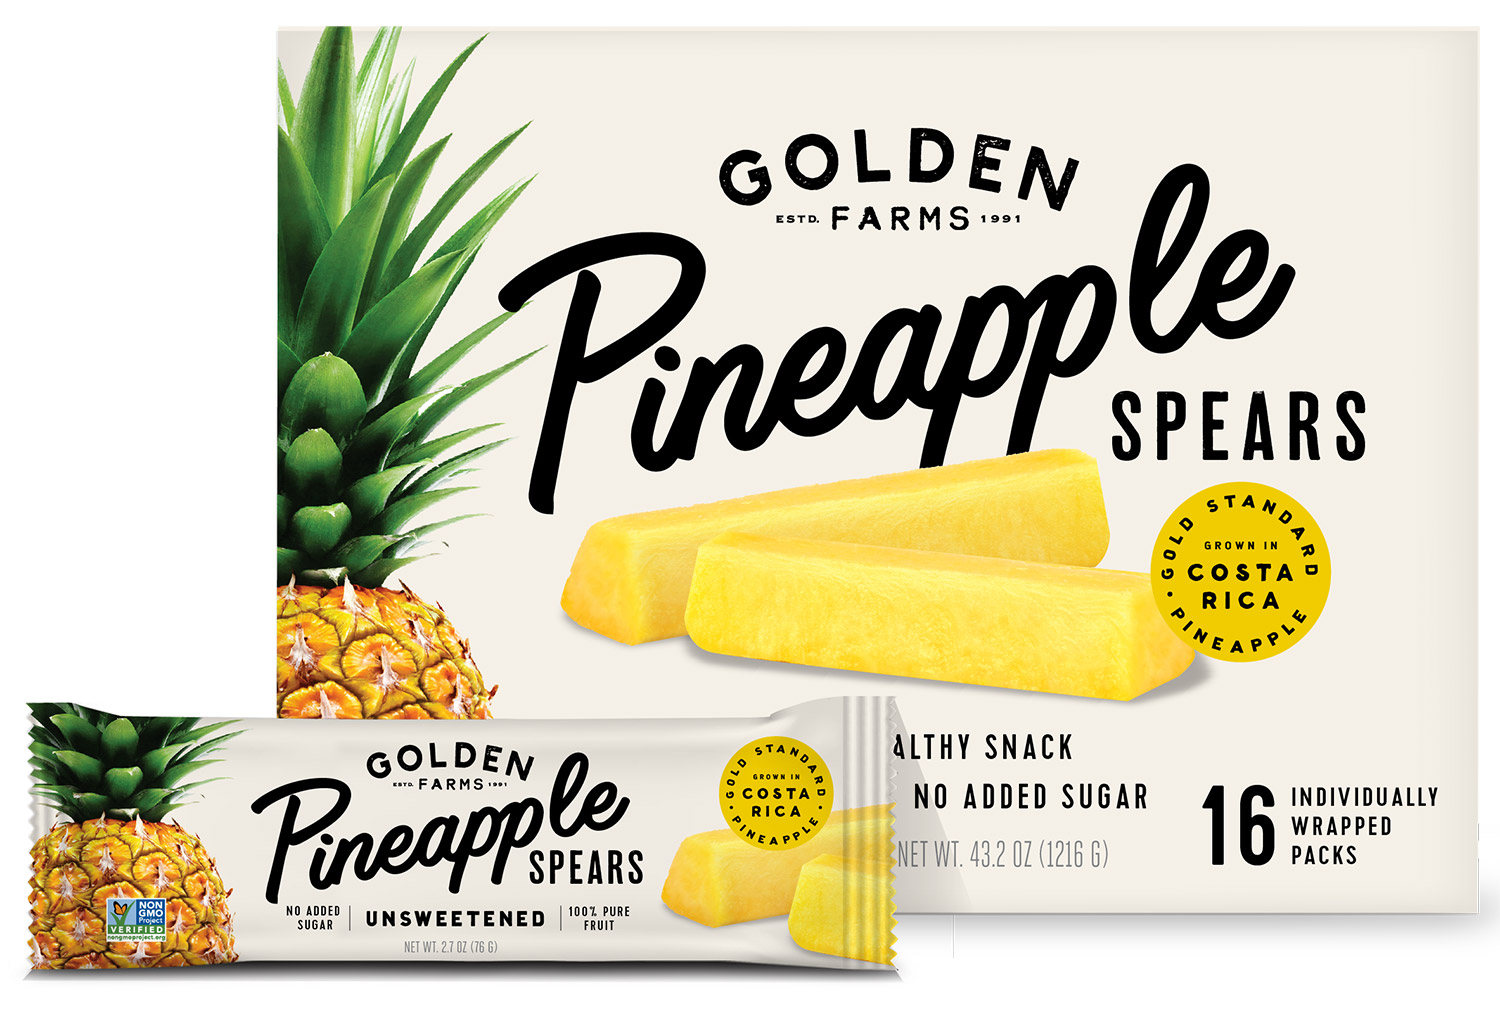 https://goldenfarmsfoods.com/wp-content/uploads/2020/09/Frozen-PineappleSpears.jpg